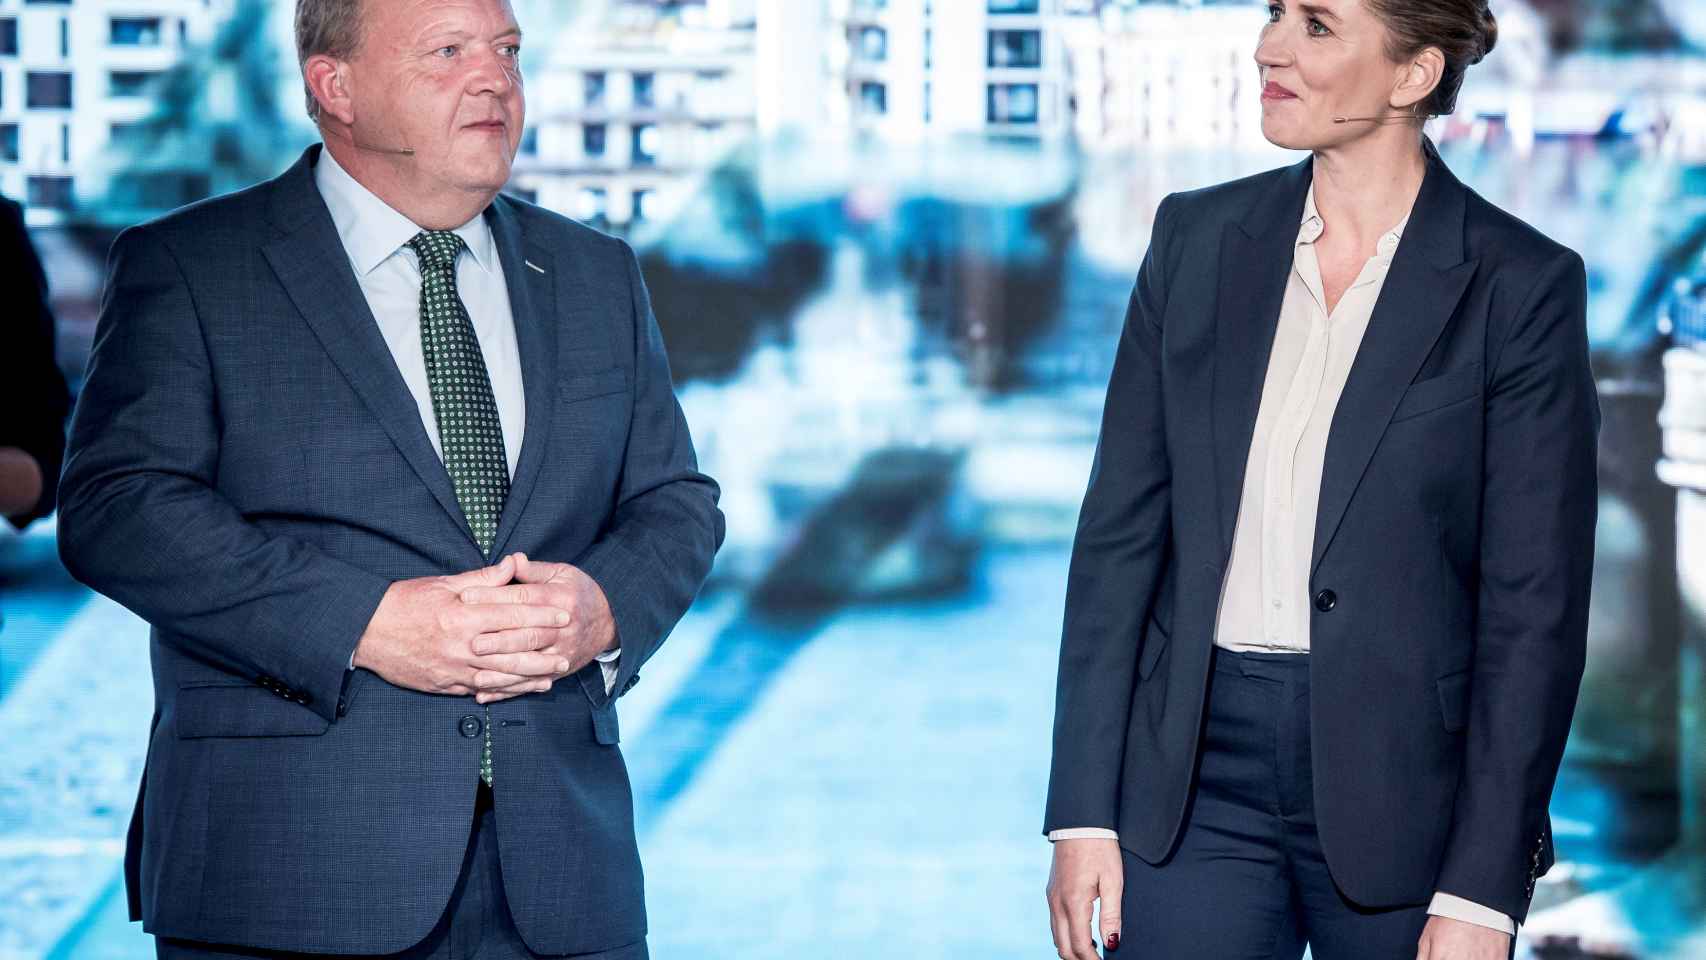 Lars Loekke Rasmussen, primer ministro de Dinamarca, junto a Mette Frederiksen, favorita en los sondeos.